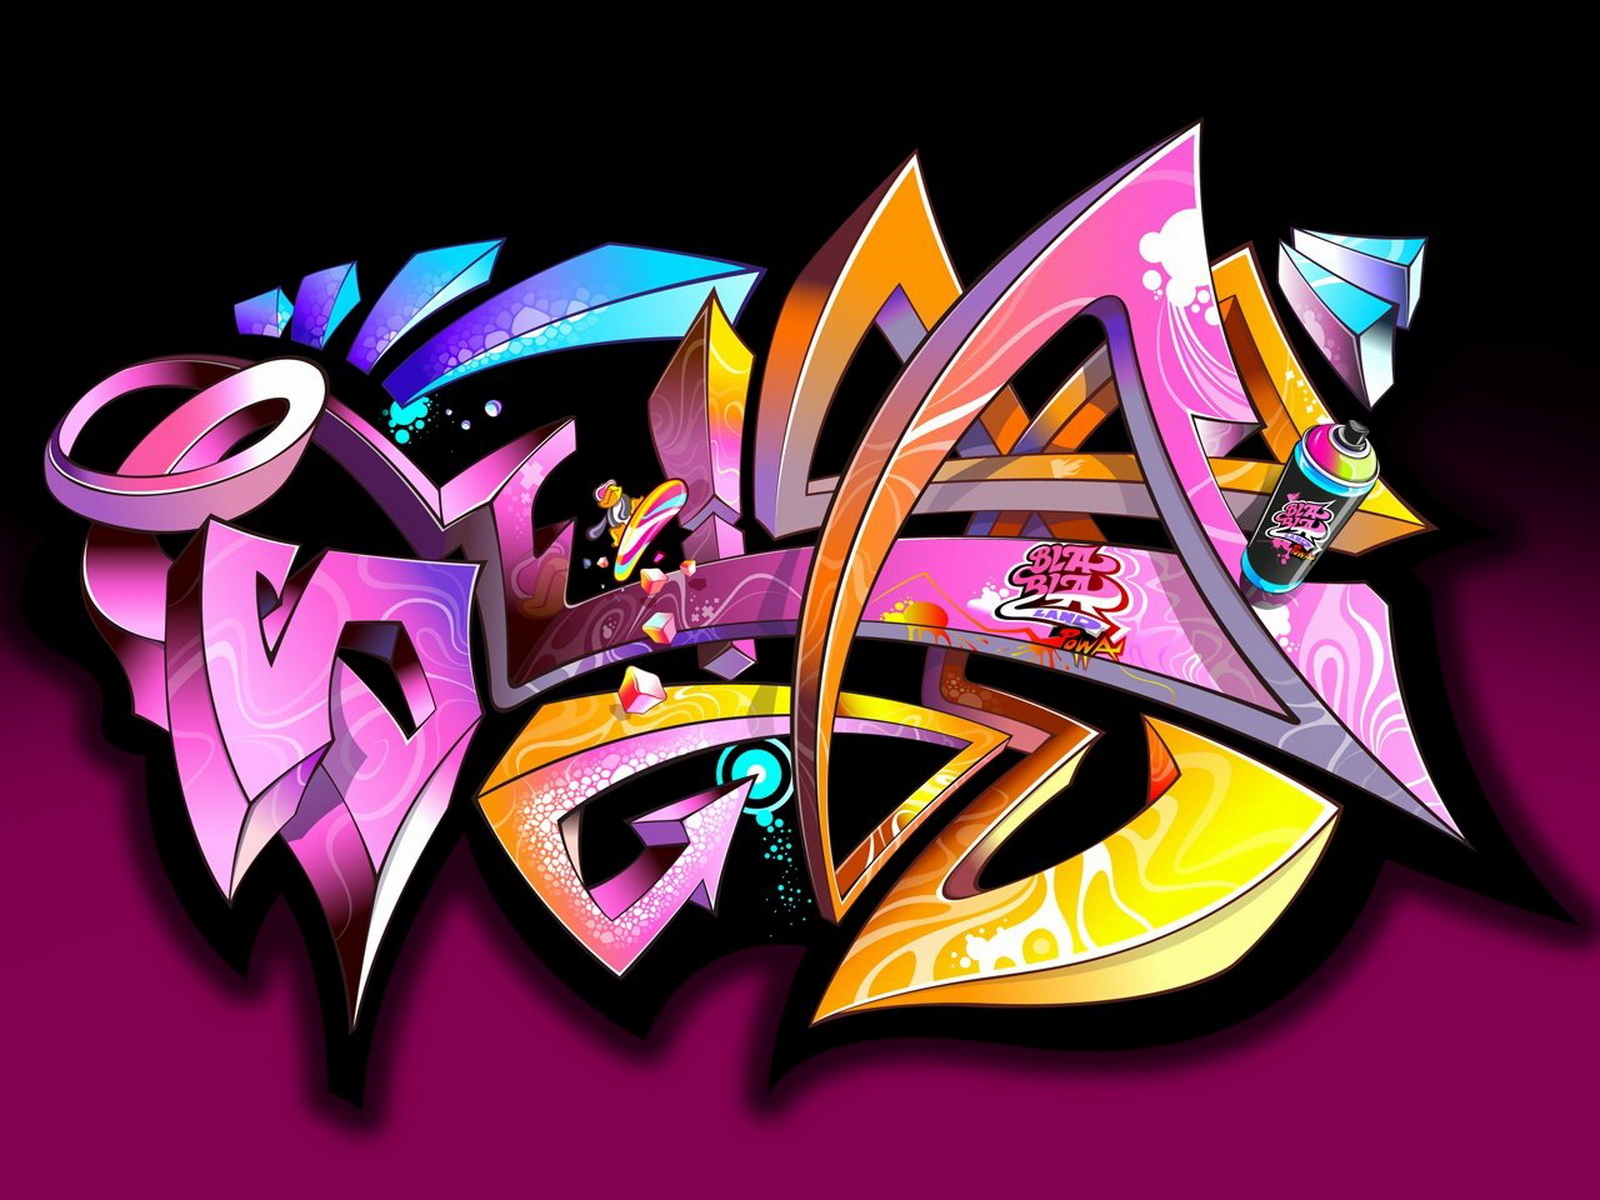 Previous, 3D-graphics - Graffiti wallpaper